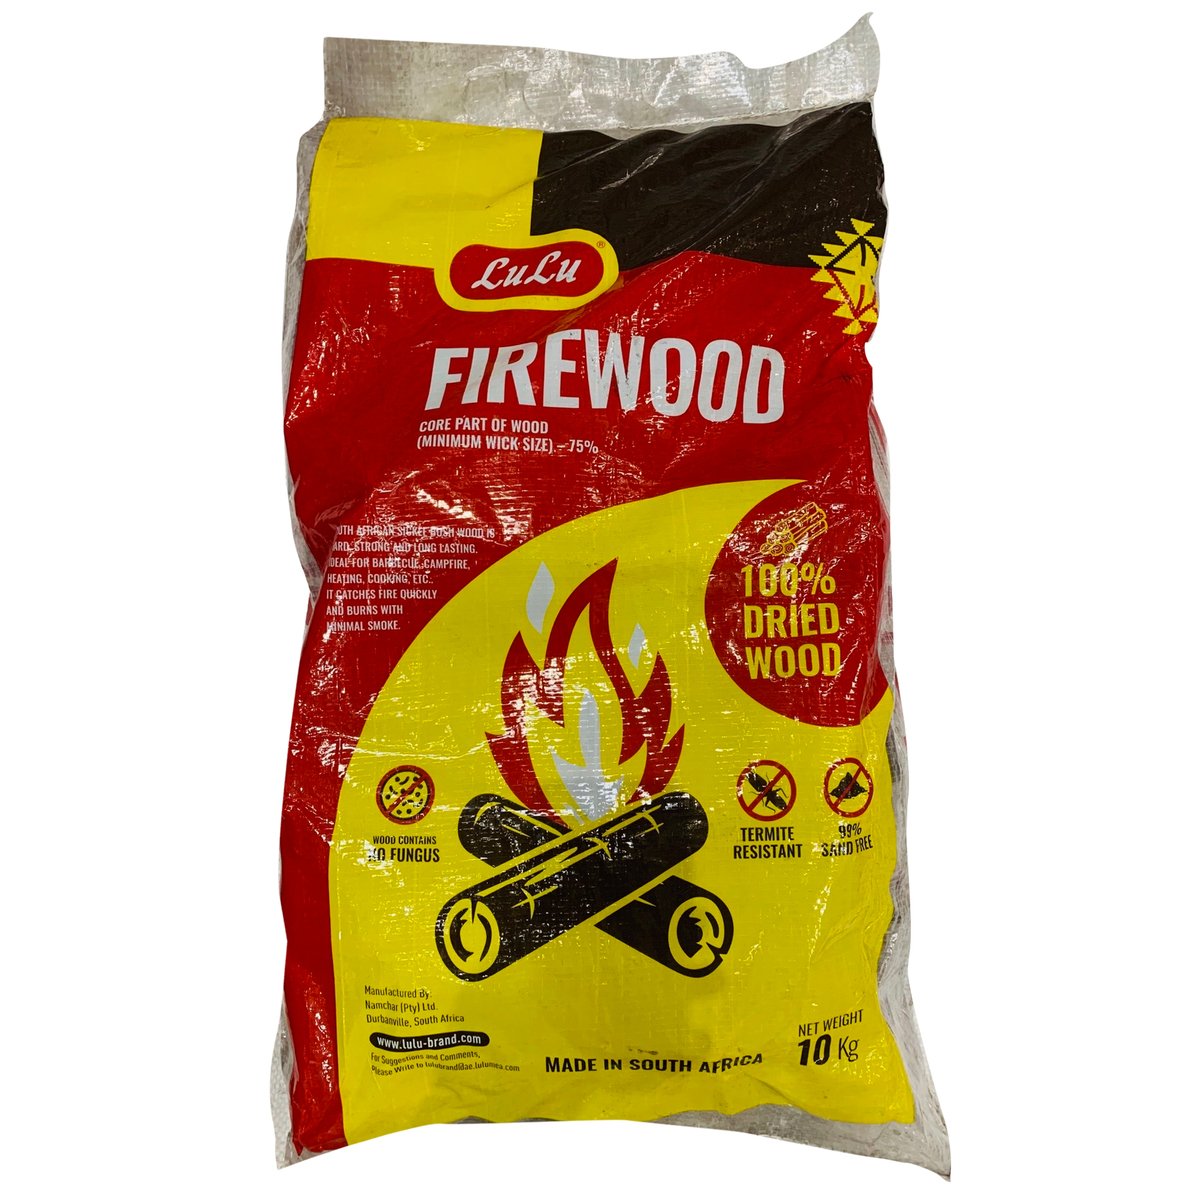 LuLu Firewood 10 kg Online at Best Price, LuLu Brand